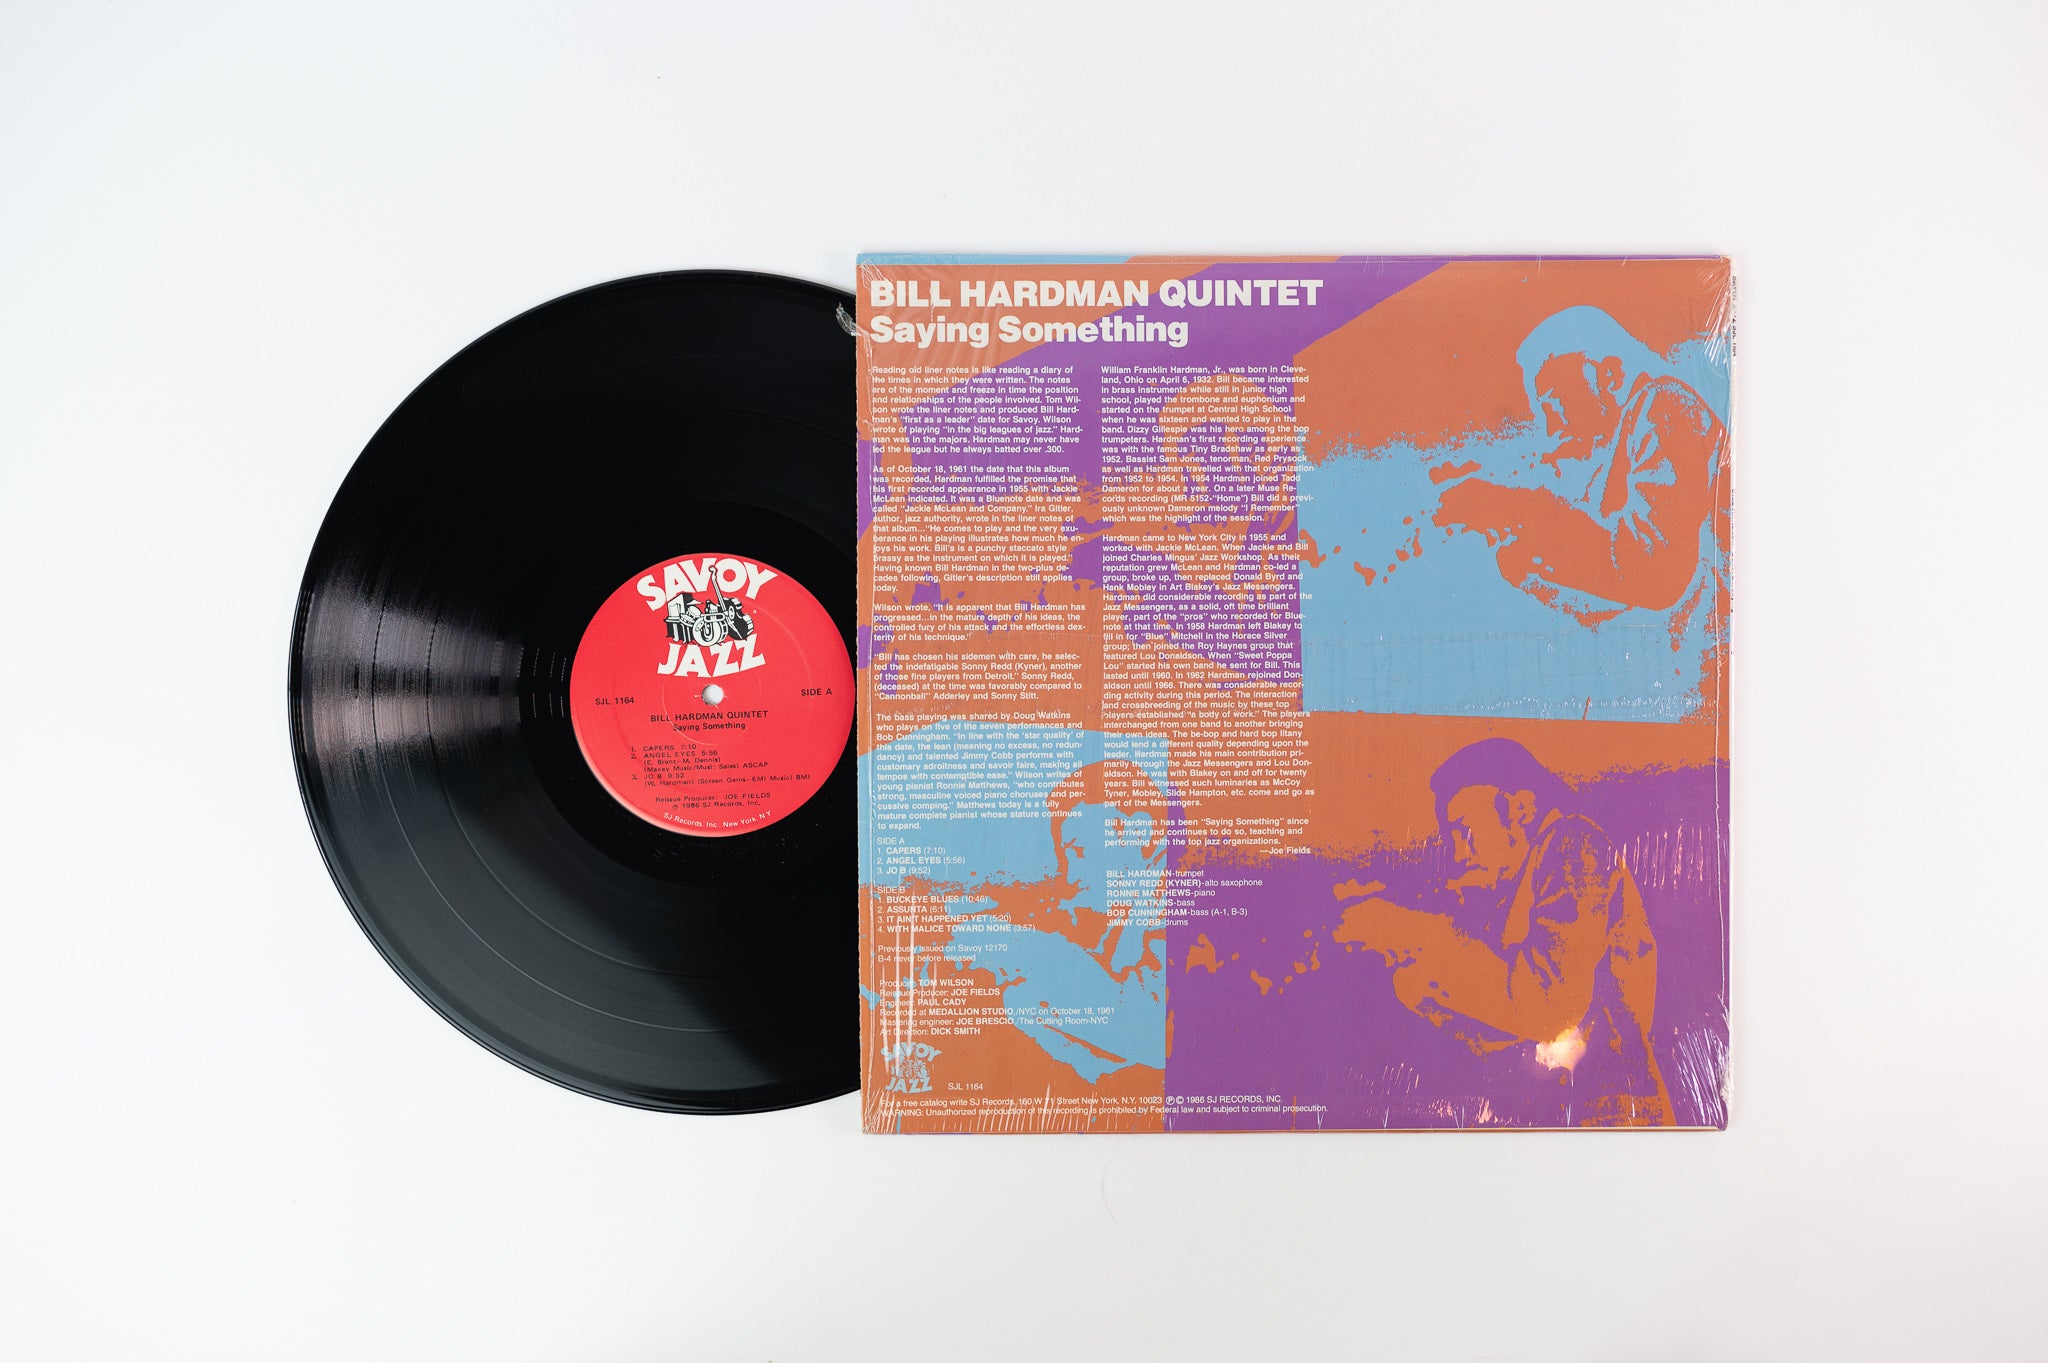 Bill Hardman Quintet – Saying Something on Savoy Jazz Reissue